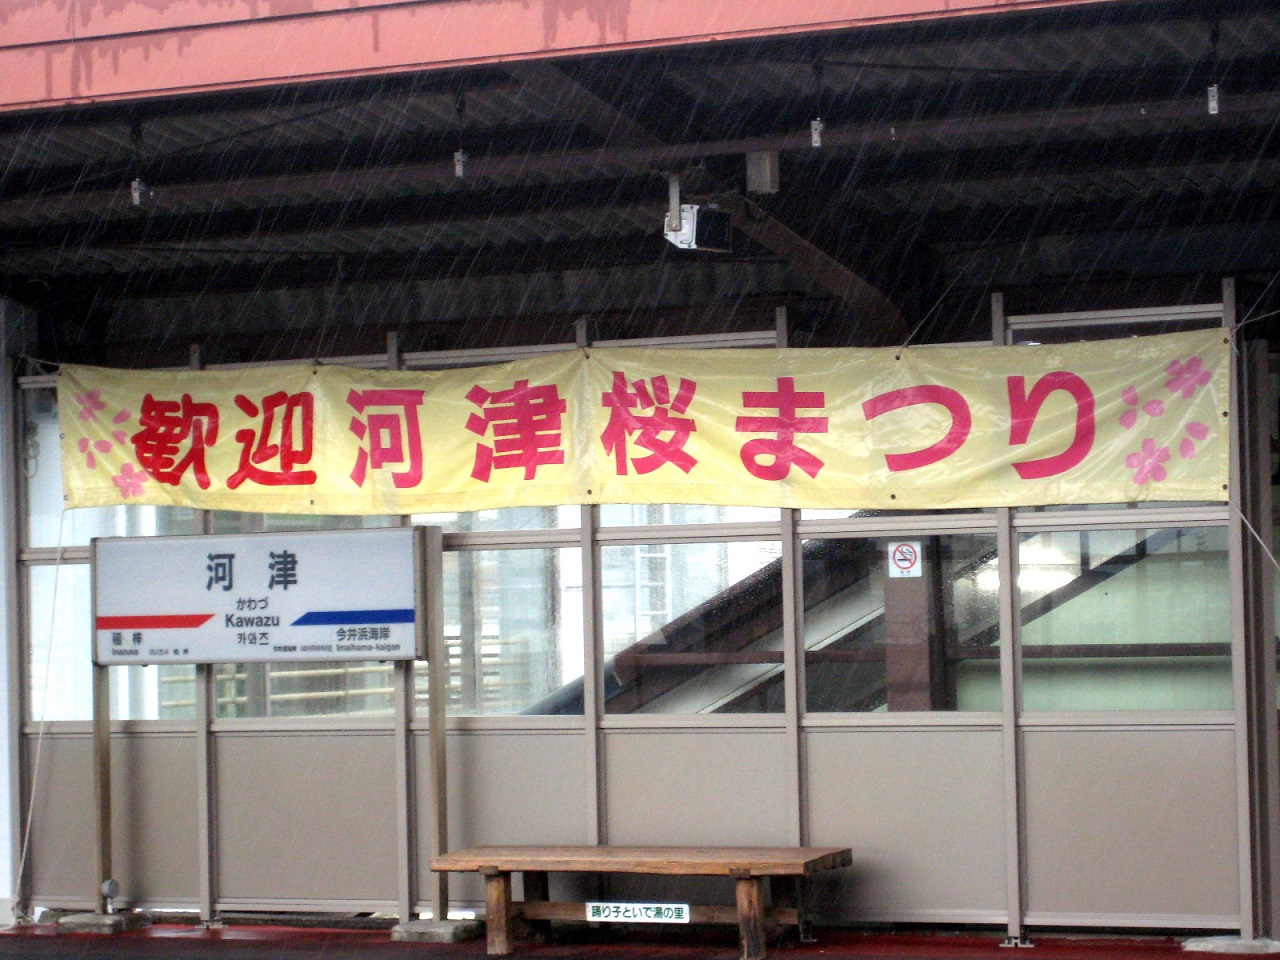 Kawazu สถานี รถไฟ ชิซูโอกะ